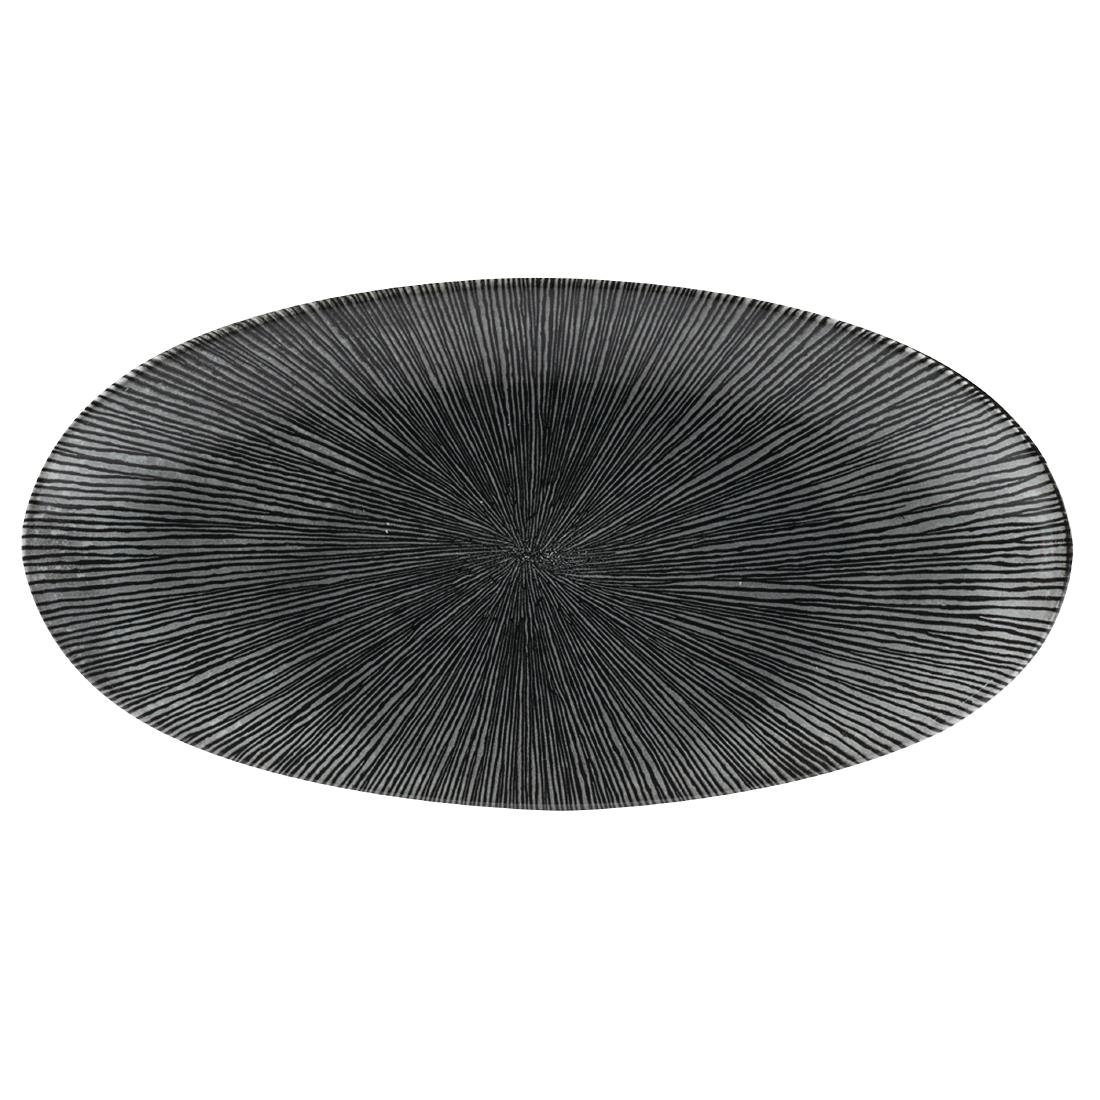 Churchill Studio Prints Agano Oval Chefs Plates Black 347 x 173mm (Pack of 6)